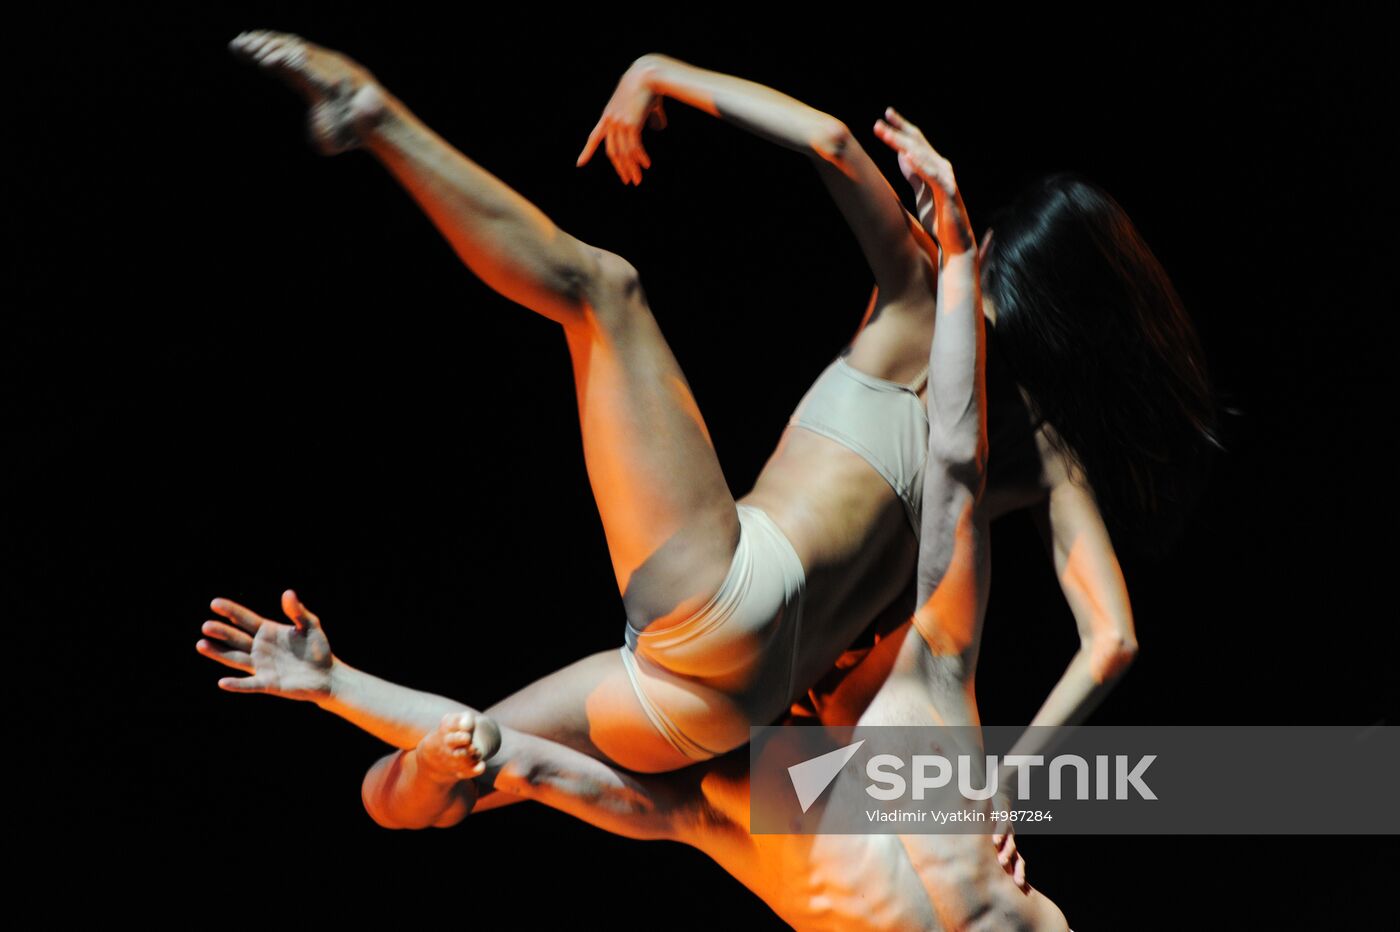 Romeo and Juliet ballet at DanceInversion-2011 festival